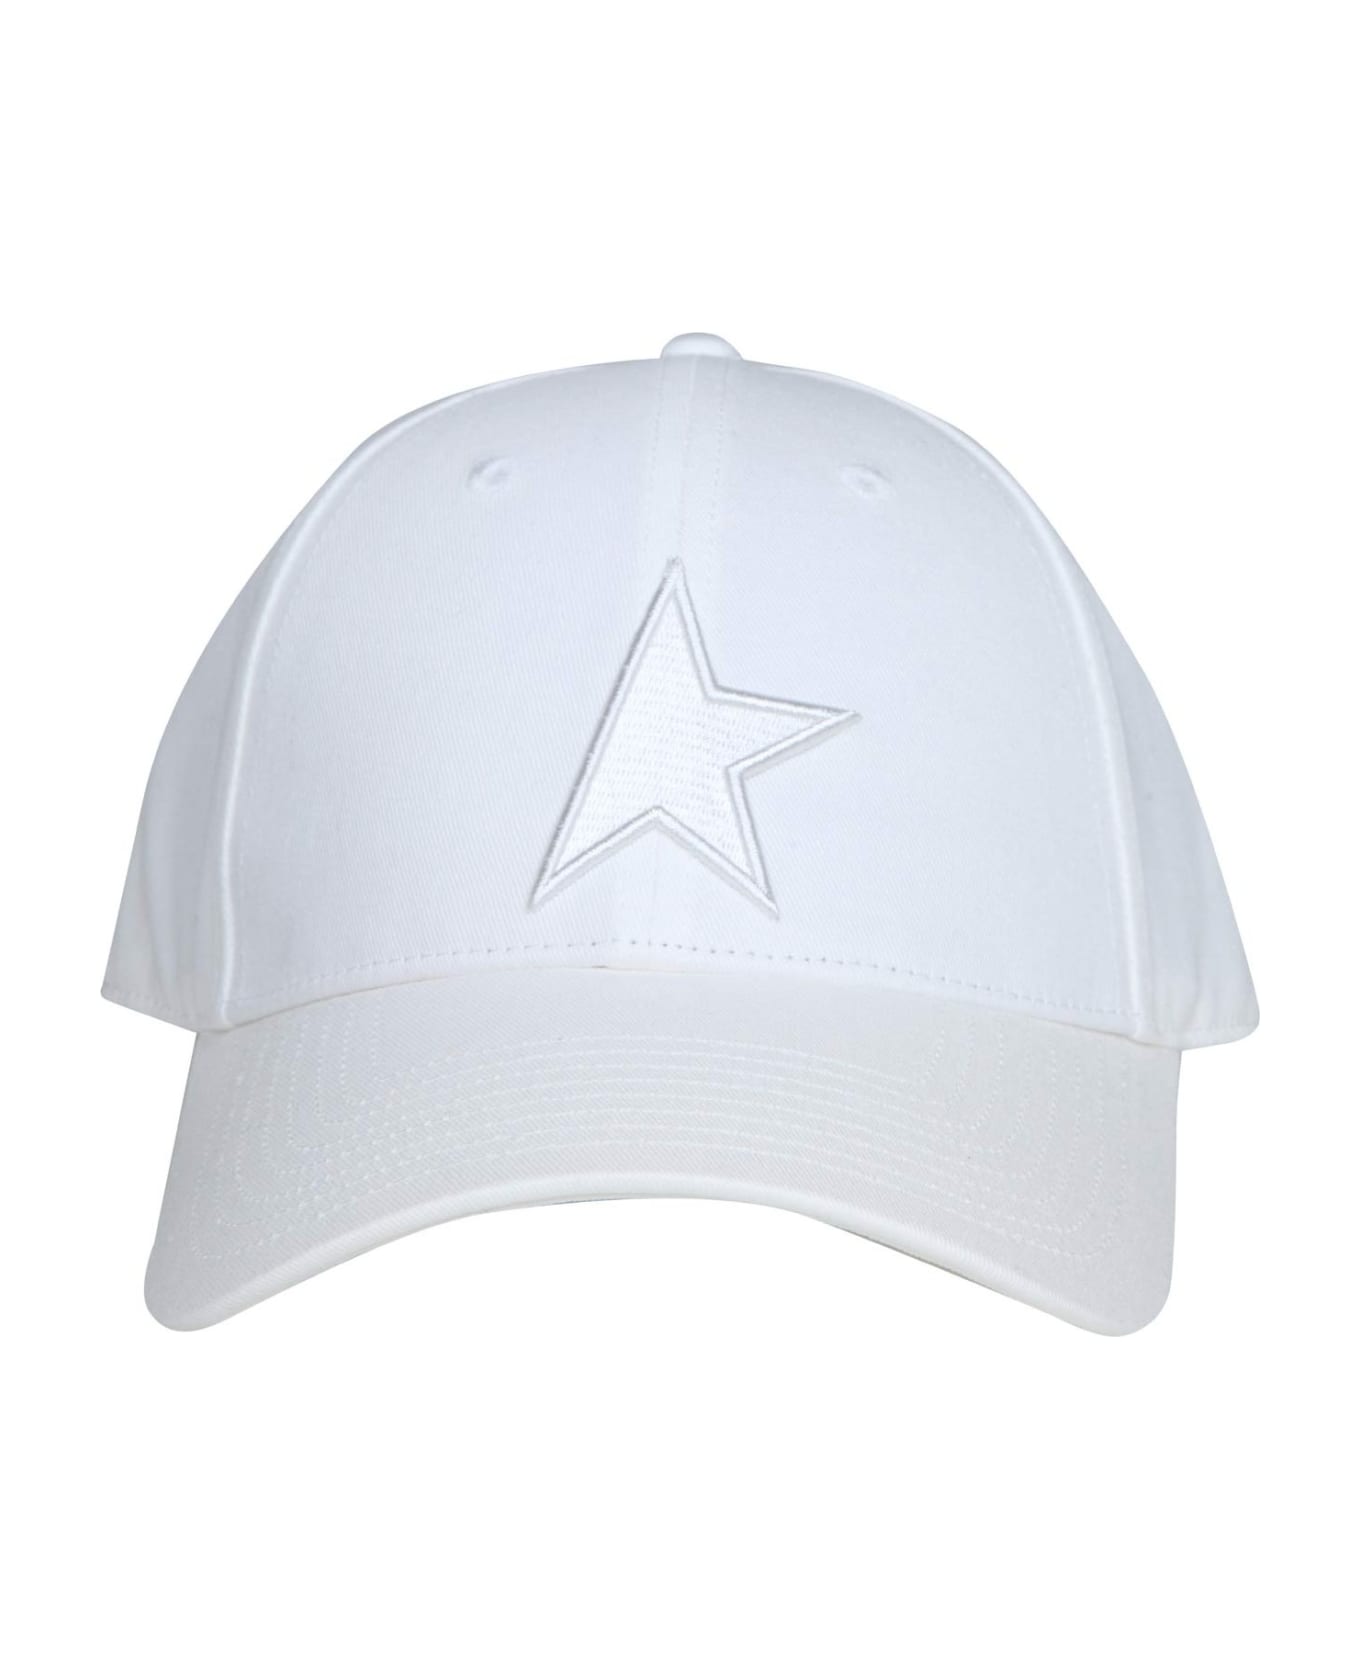 Golden Goose Star Baseball Hat In Cream Cotton - Cream